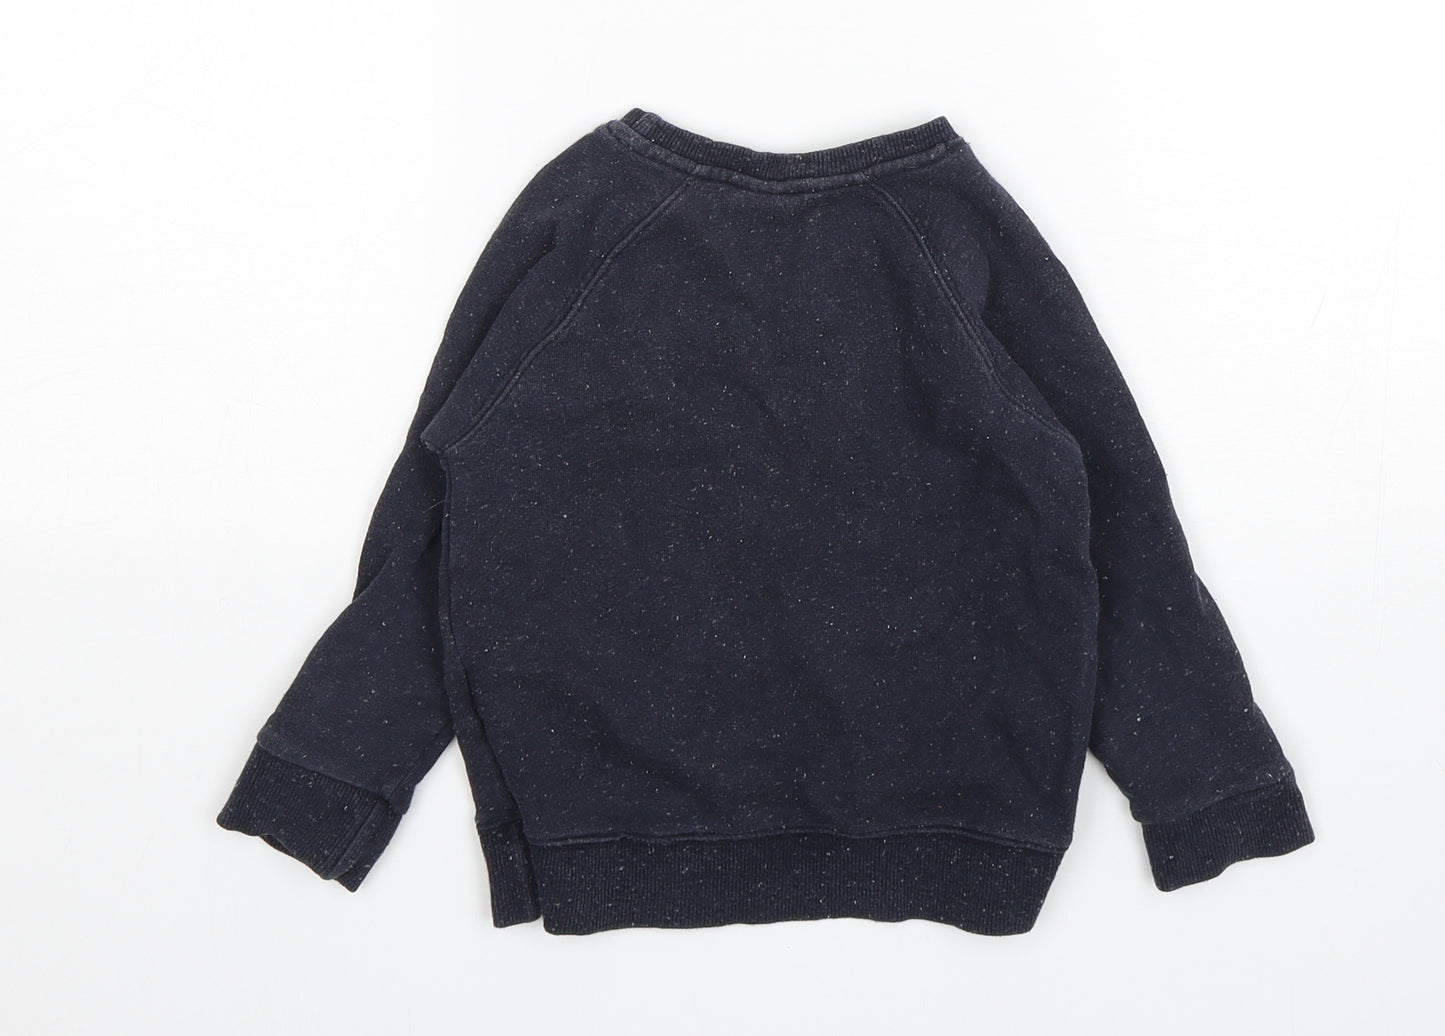 NEXT Boys Blue  Cotton Pullover Sweatshirt Size 2-3 Years   - R2D2